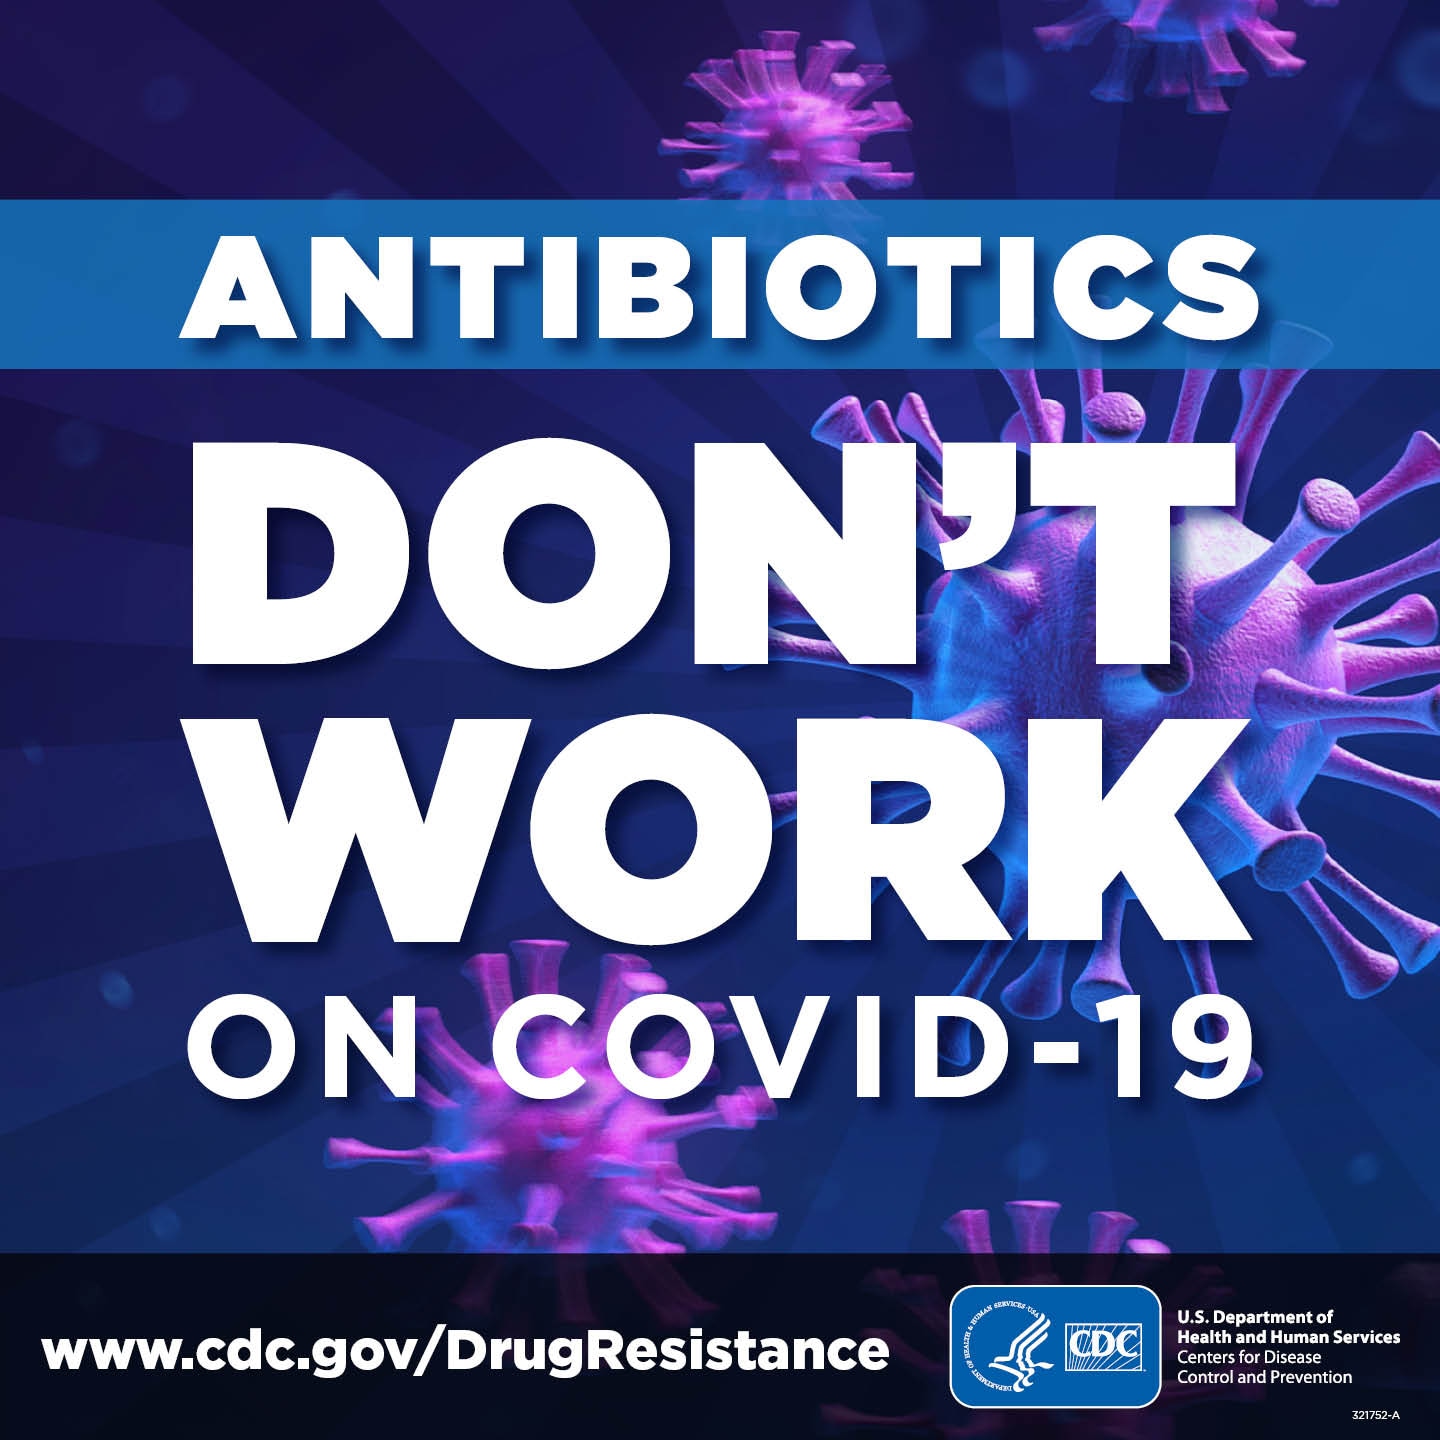 Antibiotics Don't Work on COVID-19